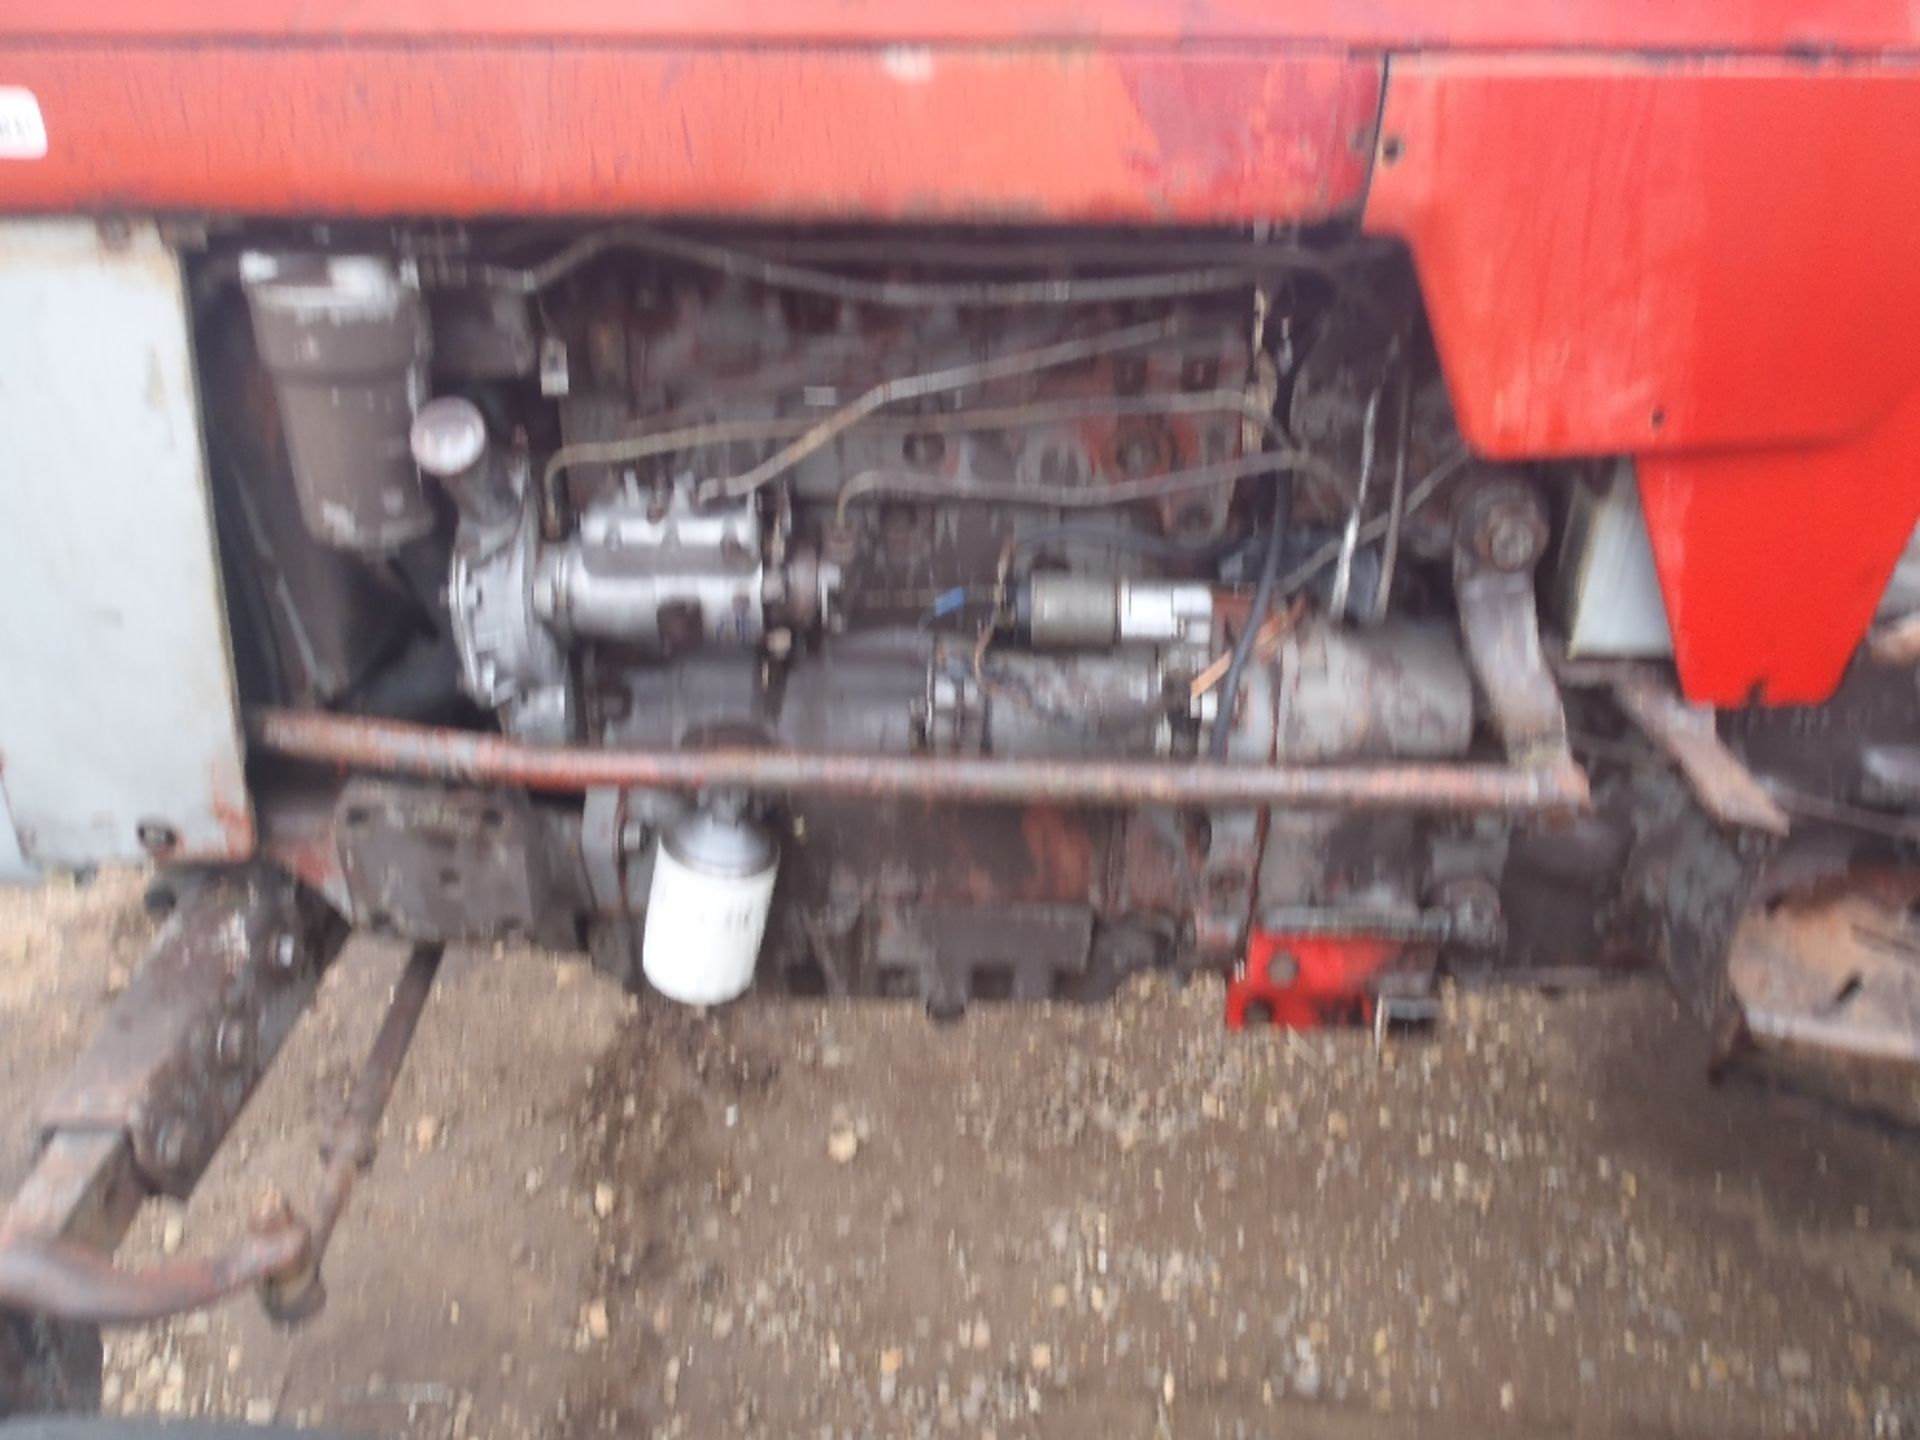 Massey Ferguson 185 2wd Tractor Reg.No. 76 DL 38 Ser.No.320154 - Image 6 of 8